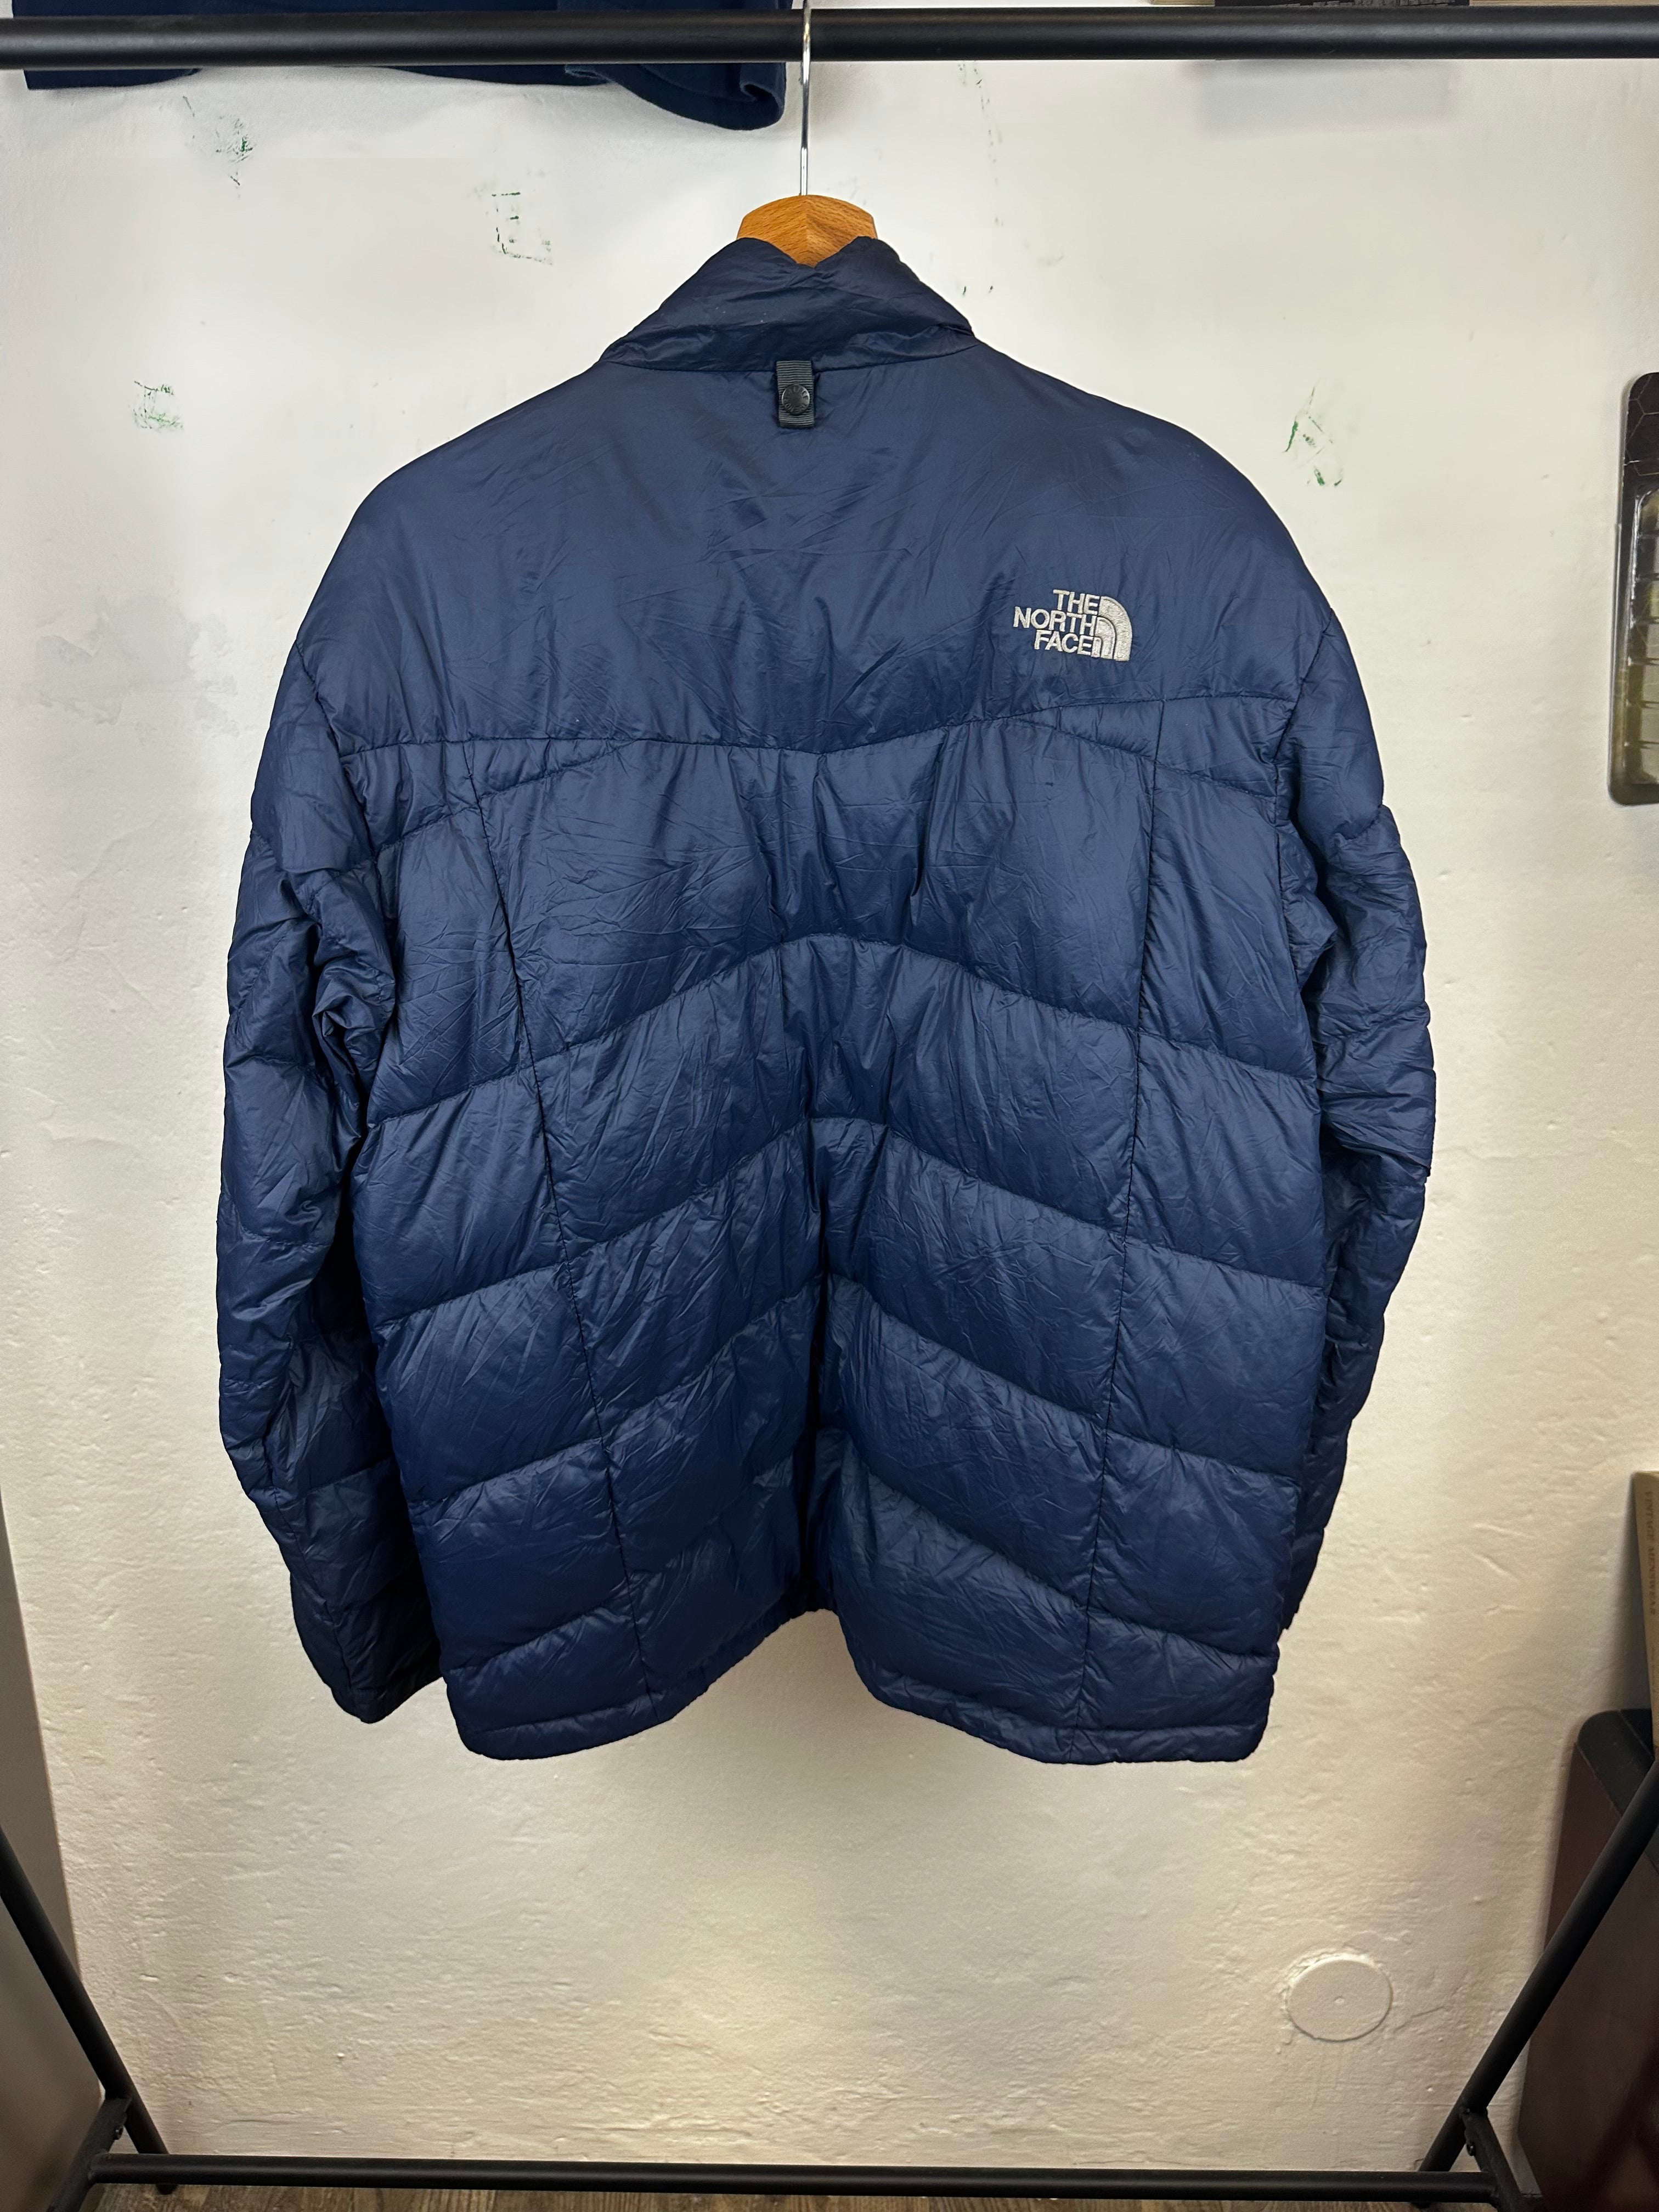 Vintage The North Face 700 jacket - size L